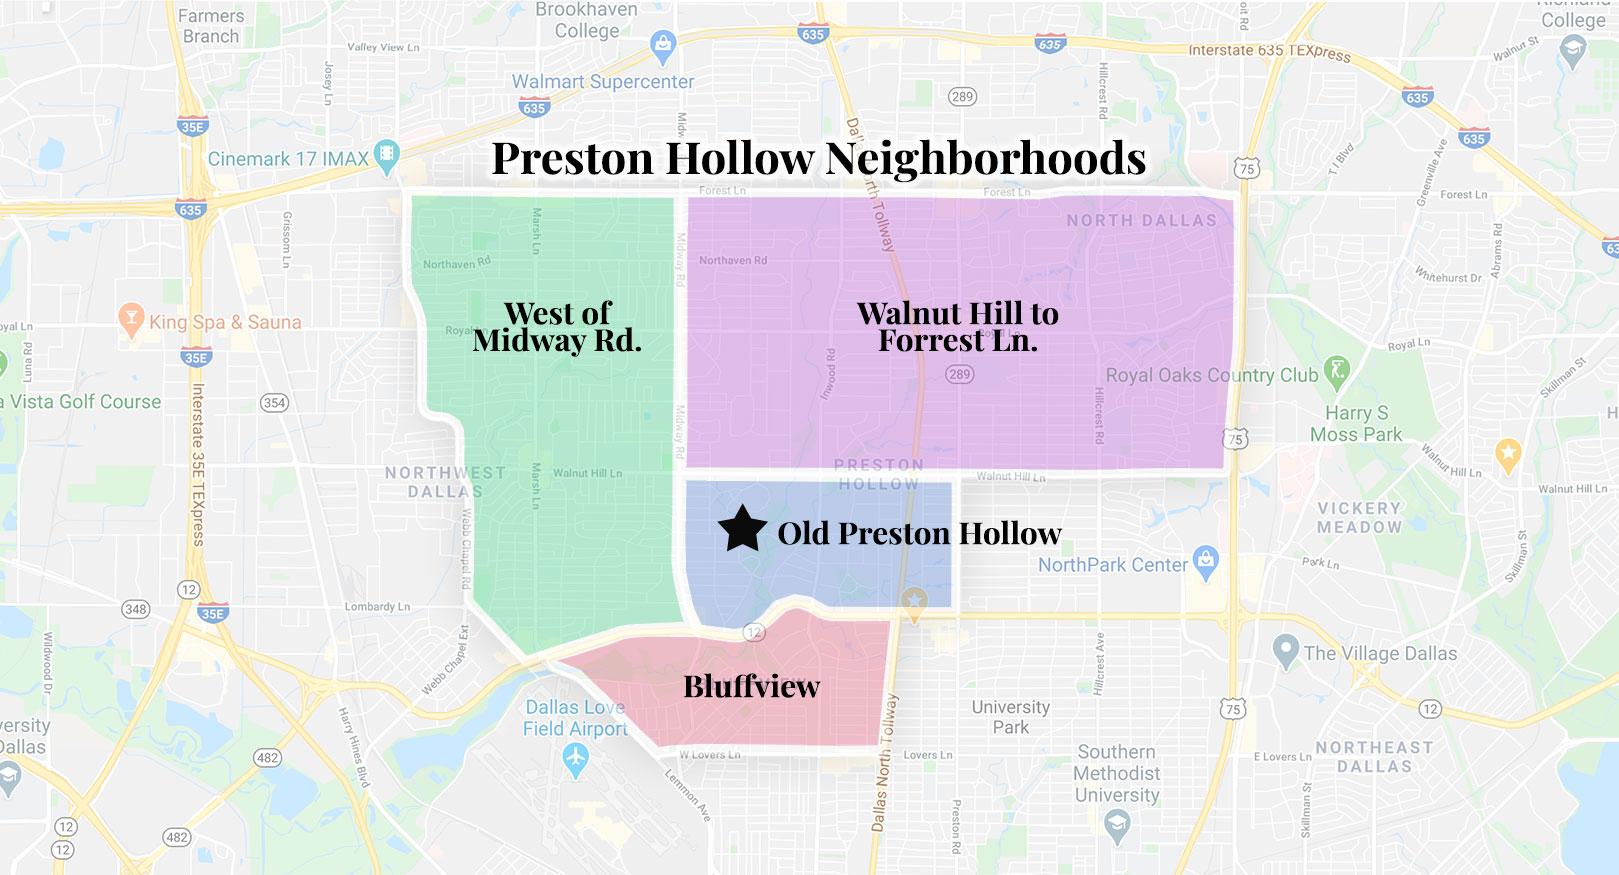 Galleria Dallas sees new ownership - Preston Hollow